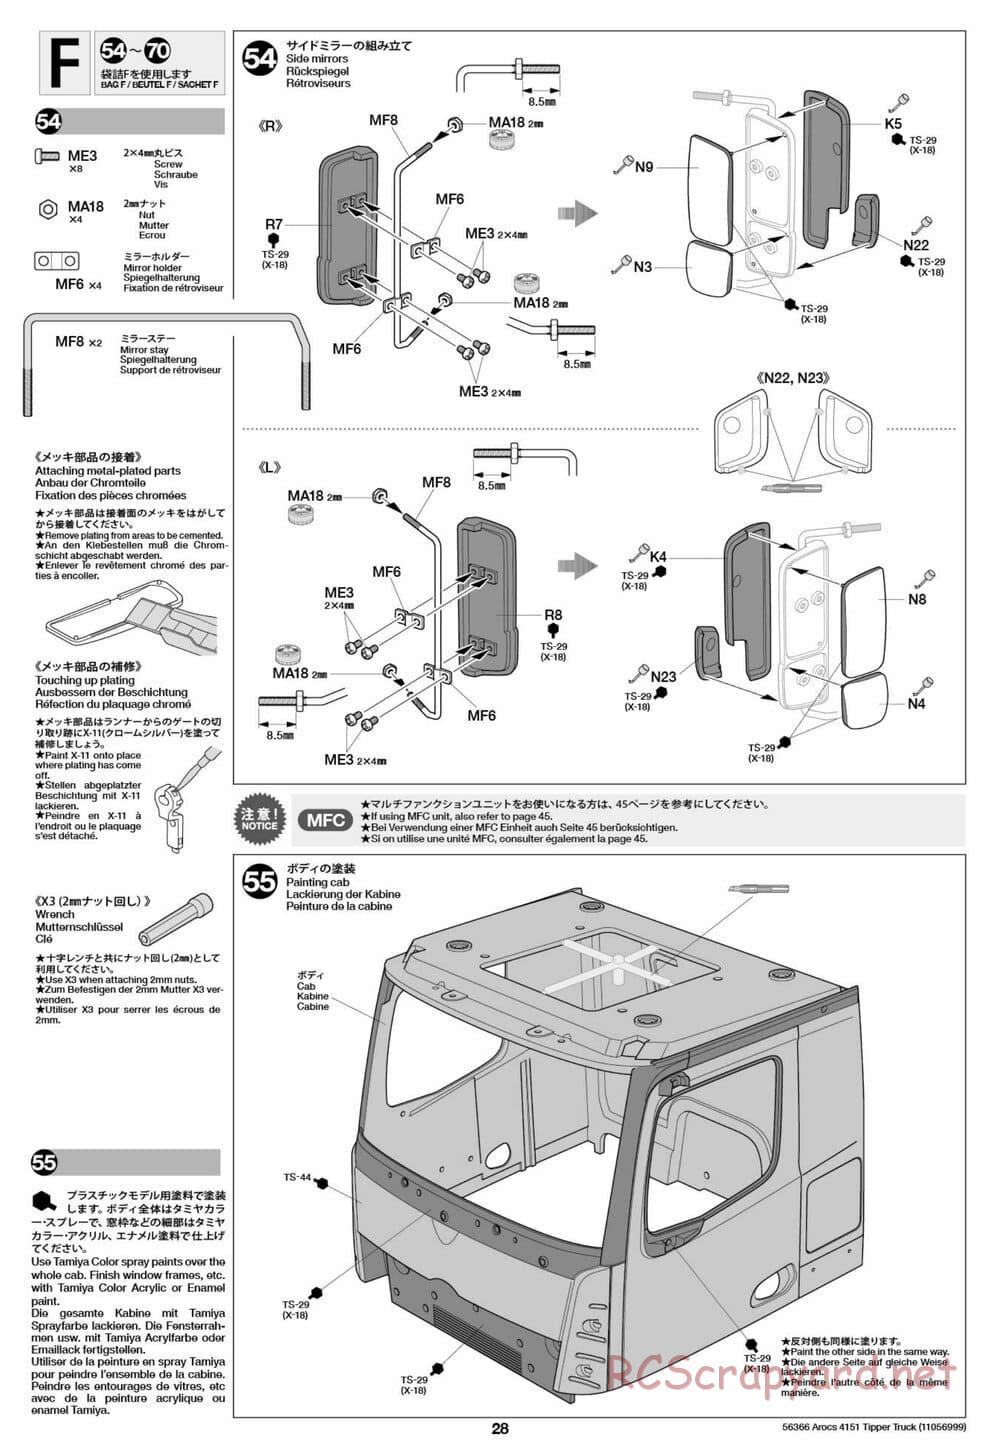 Tamiya - Mercedes-Benz Arocs 4151 8x4 Tipper Truck - Manual - Page 29